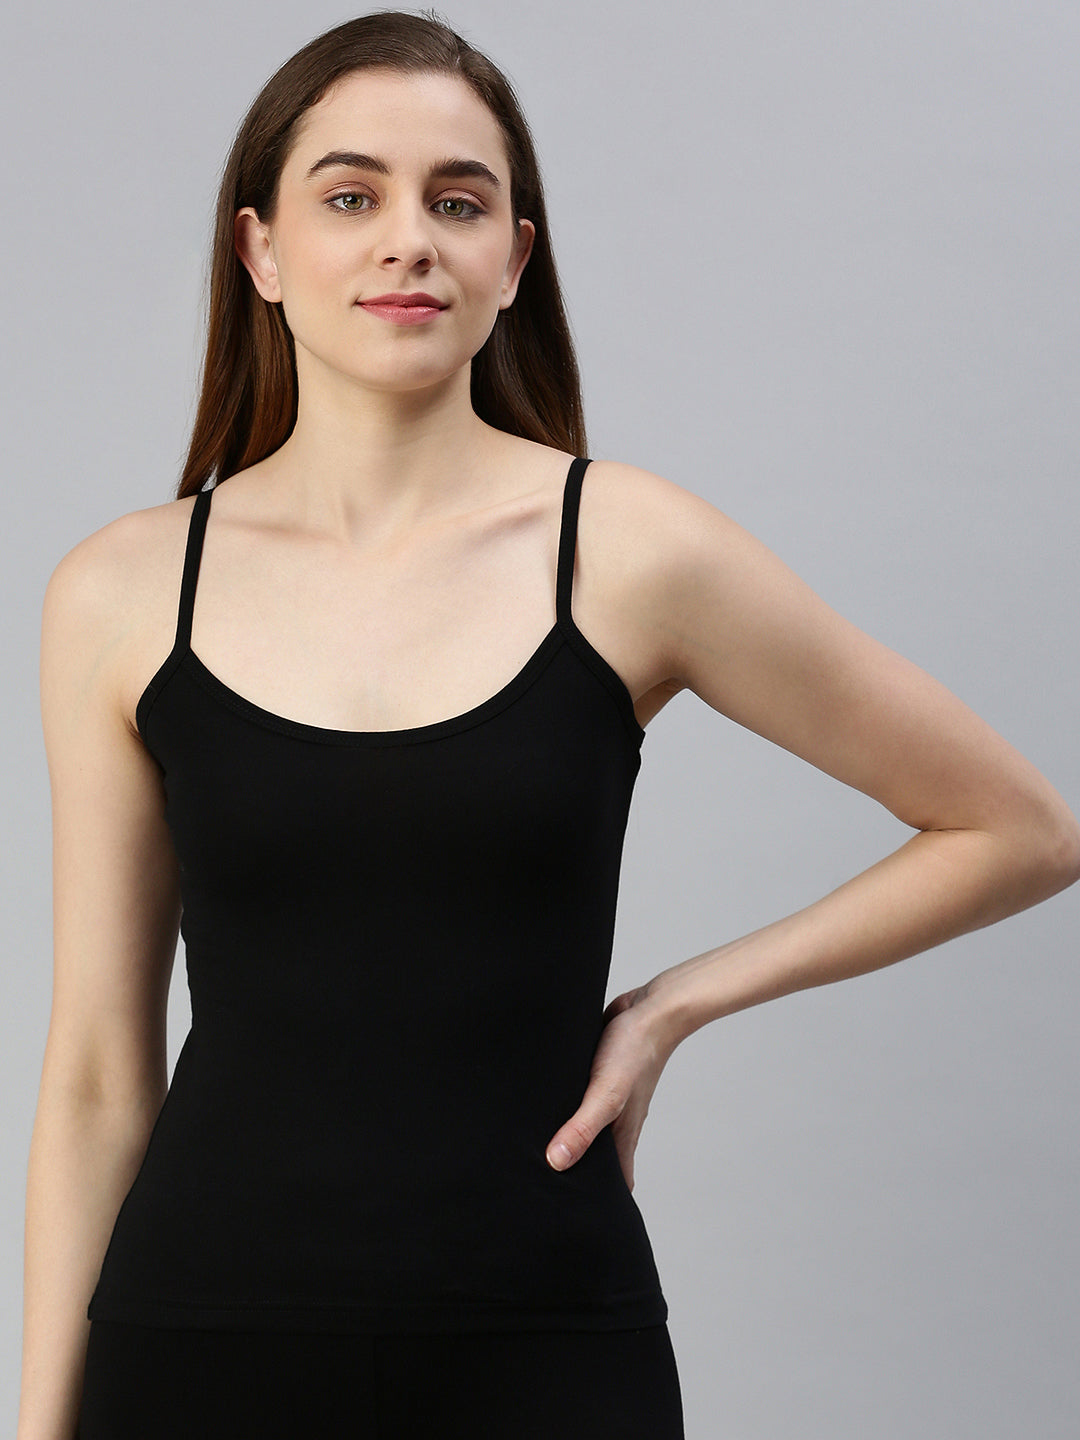 Shop Prisma's Black Basic Camisole for Everyday Wear